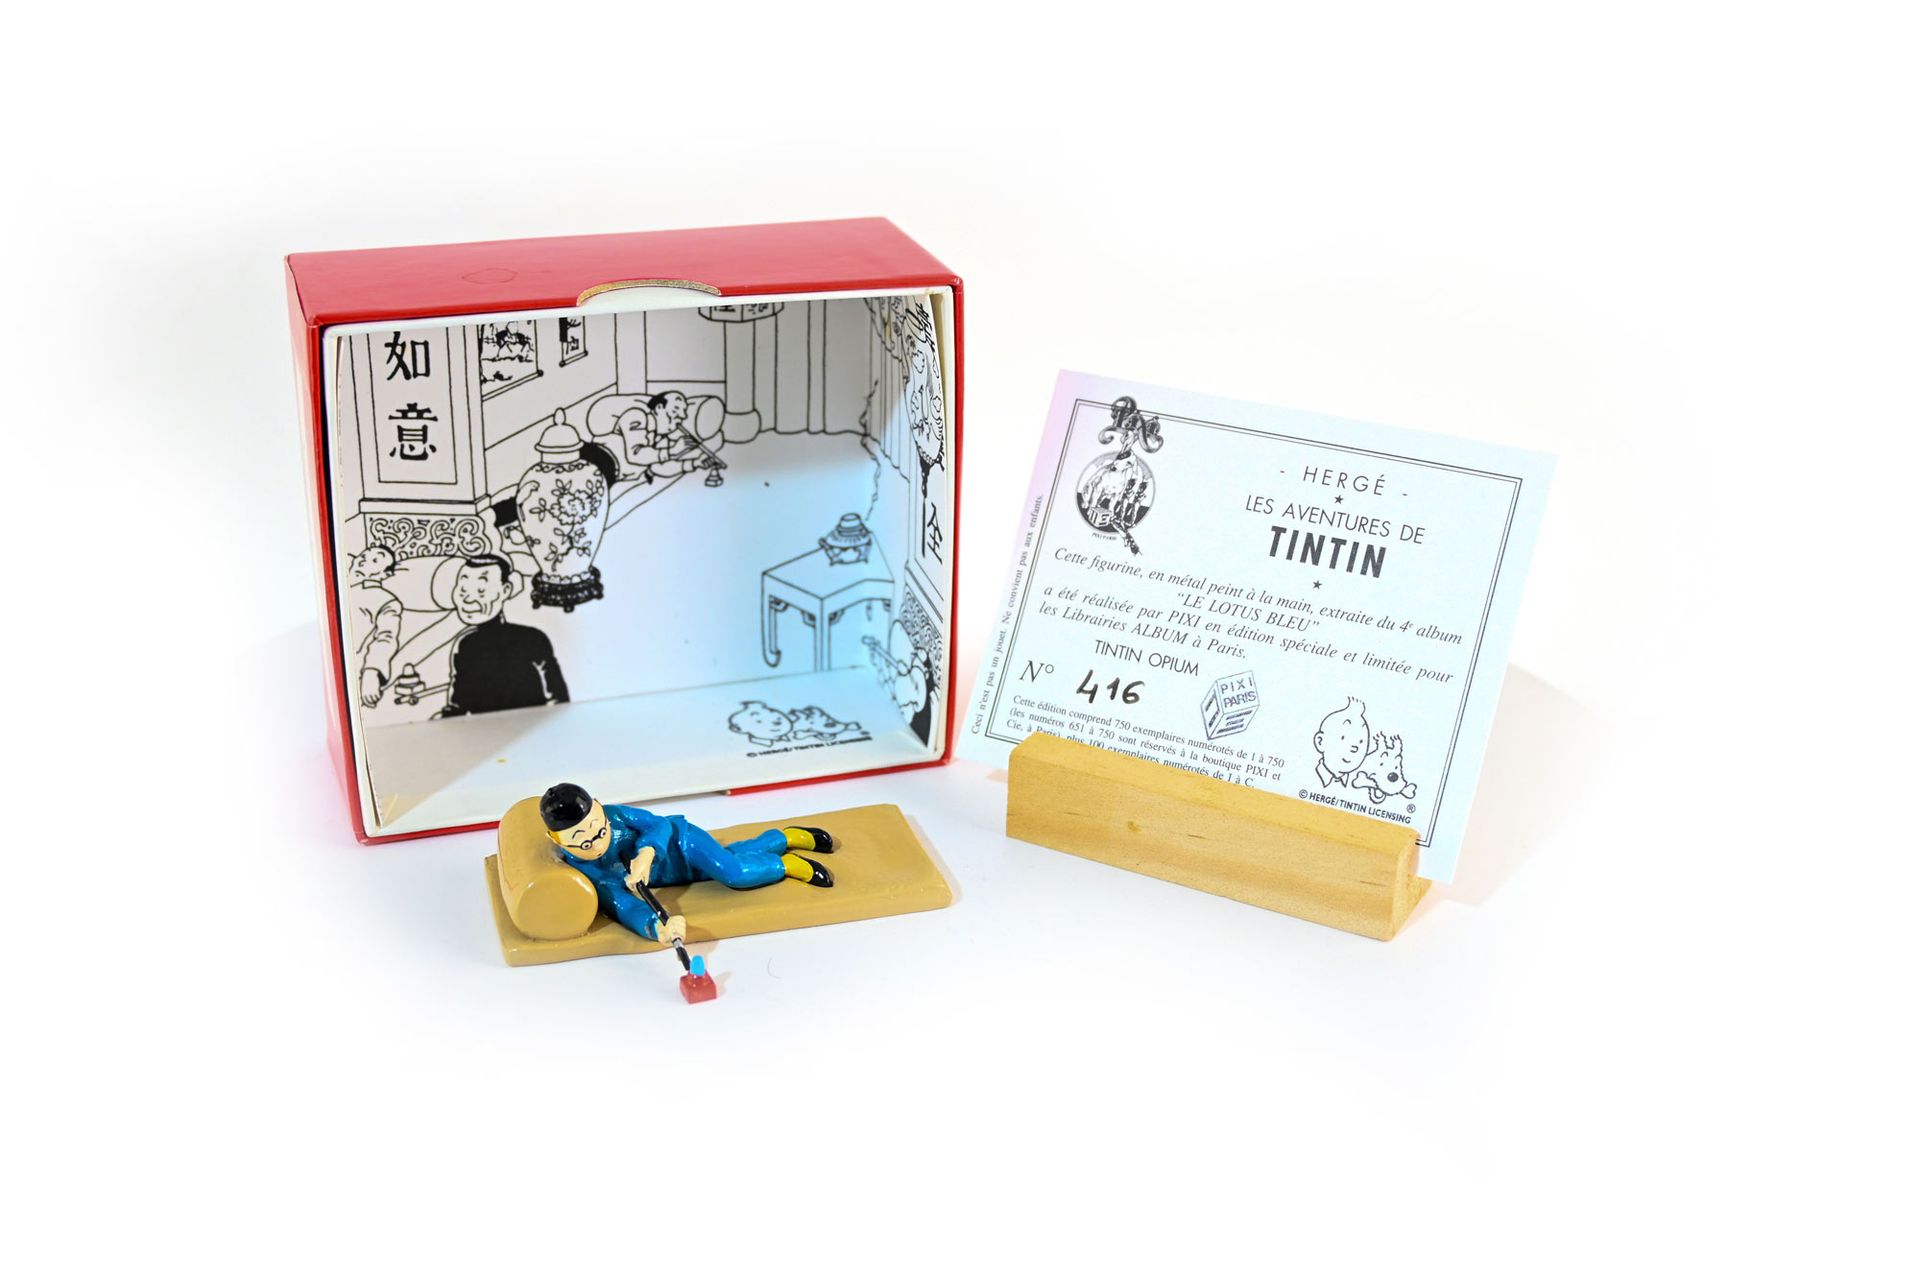 HERGÉ HERGÉ. Tintin. Tintin opium, figurine Pixi réf 4600, avec boîte et certifi&hellip;